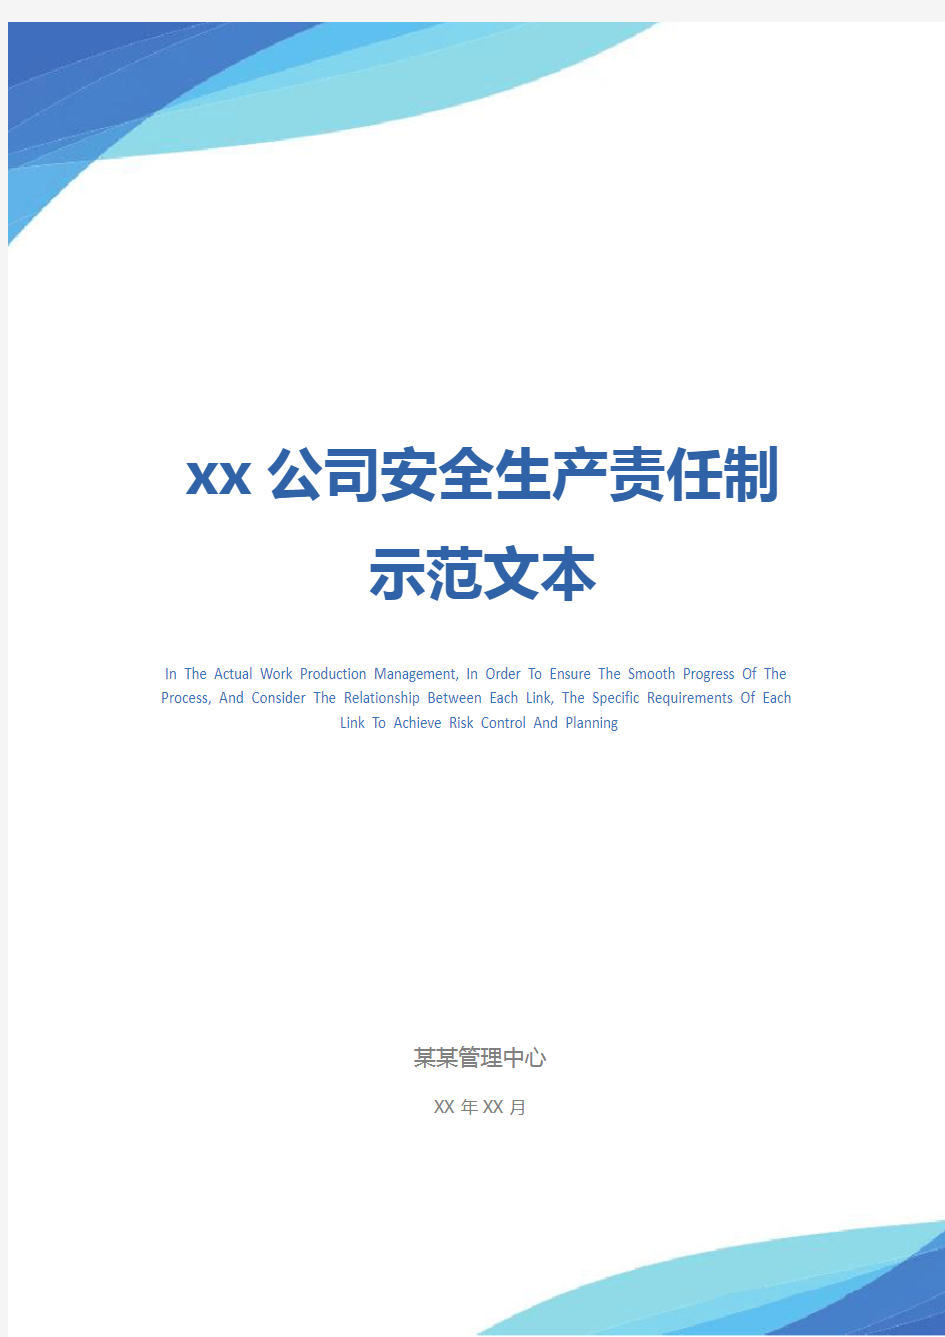 xx公司安全生产责任制示范文本